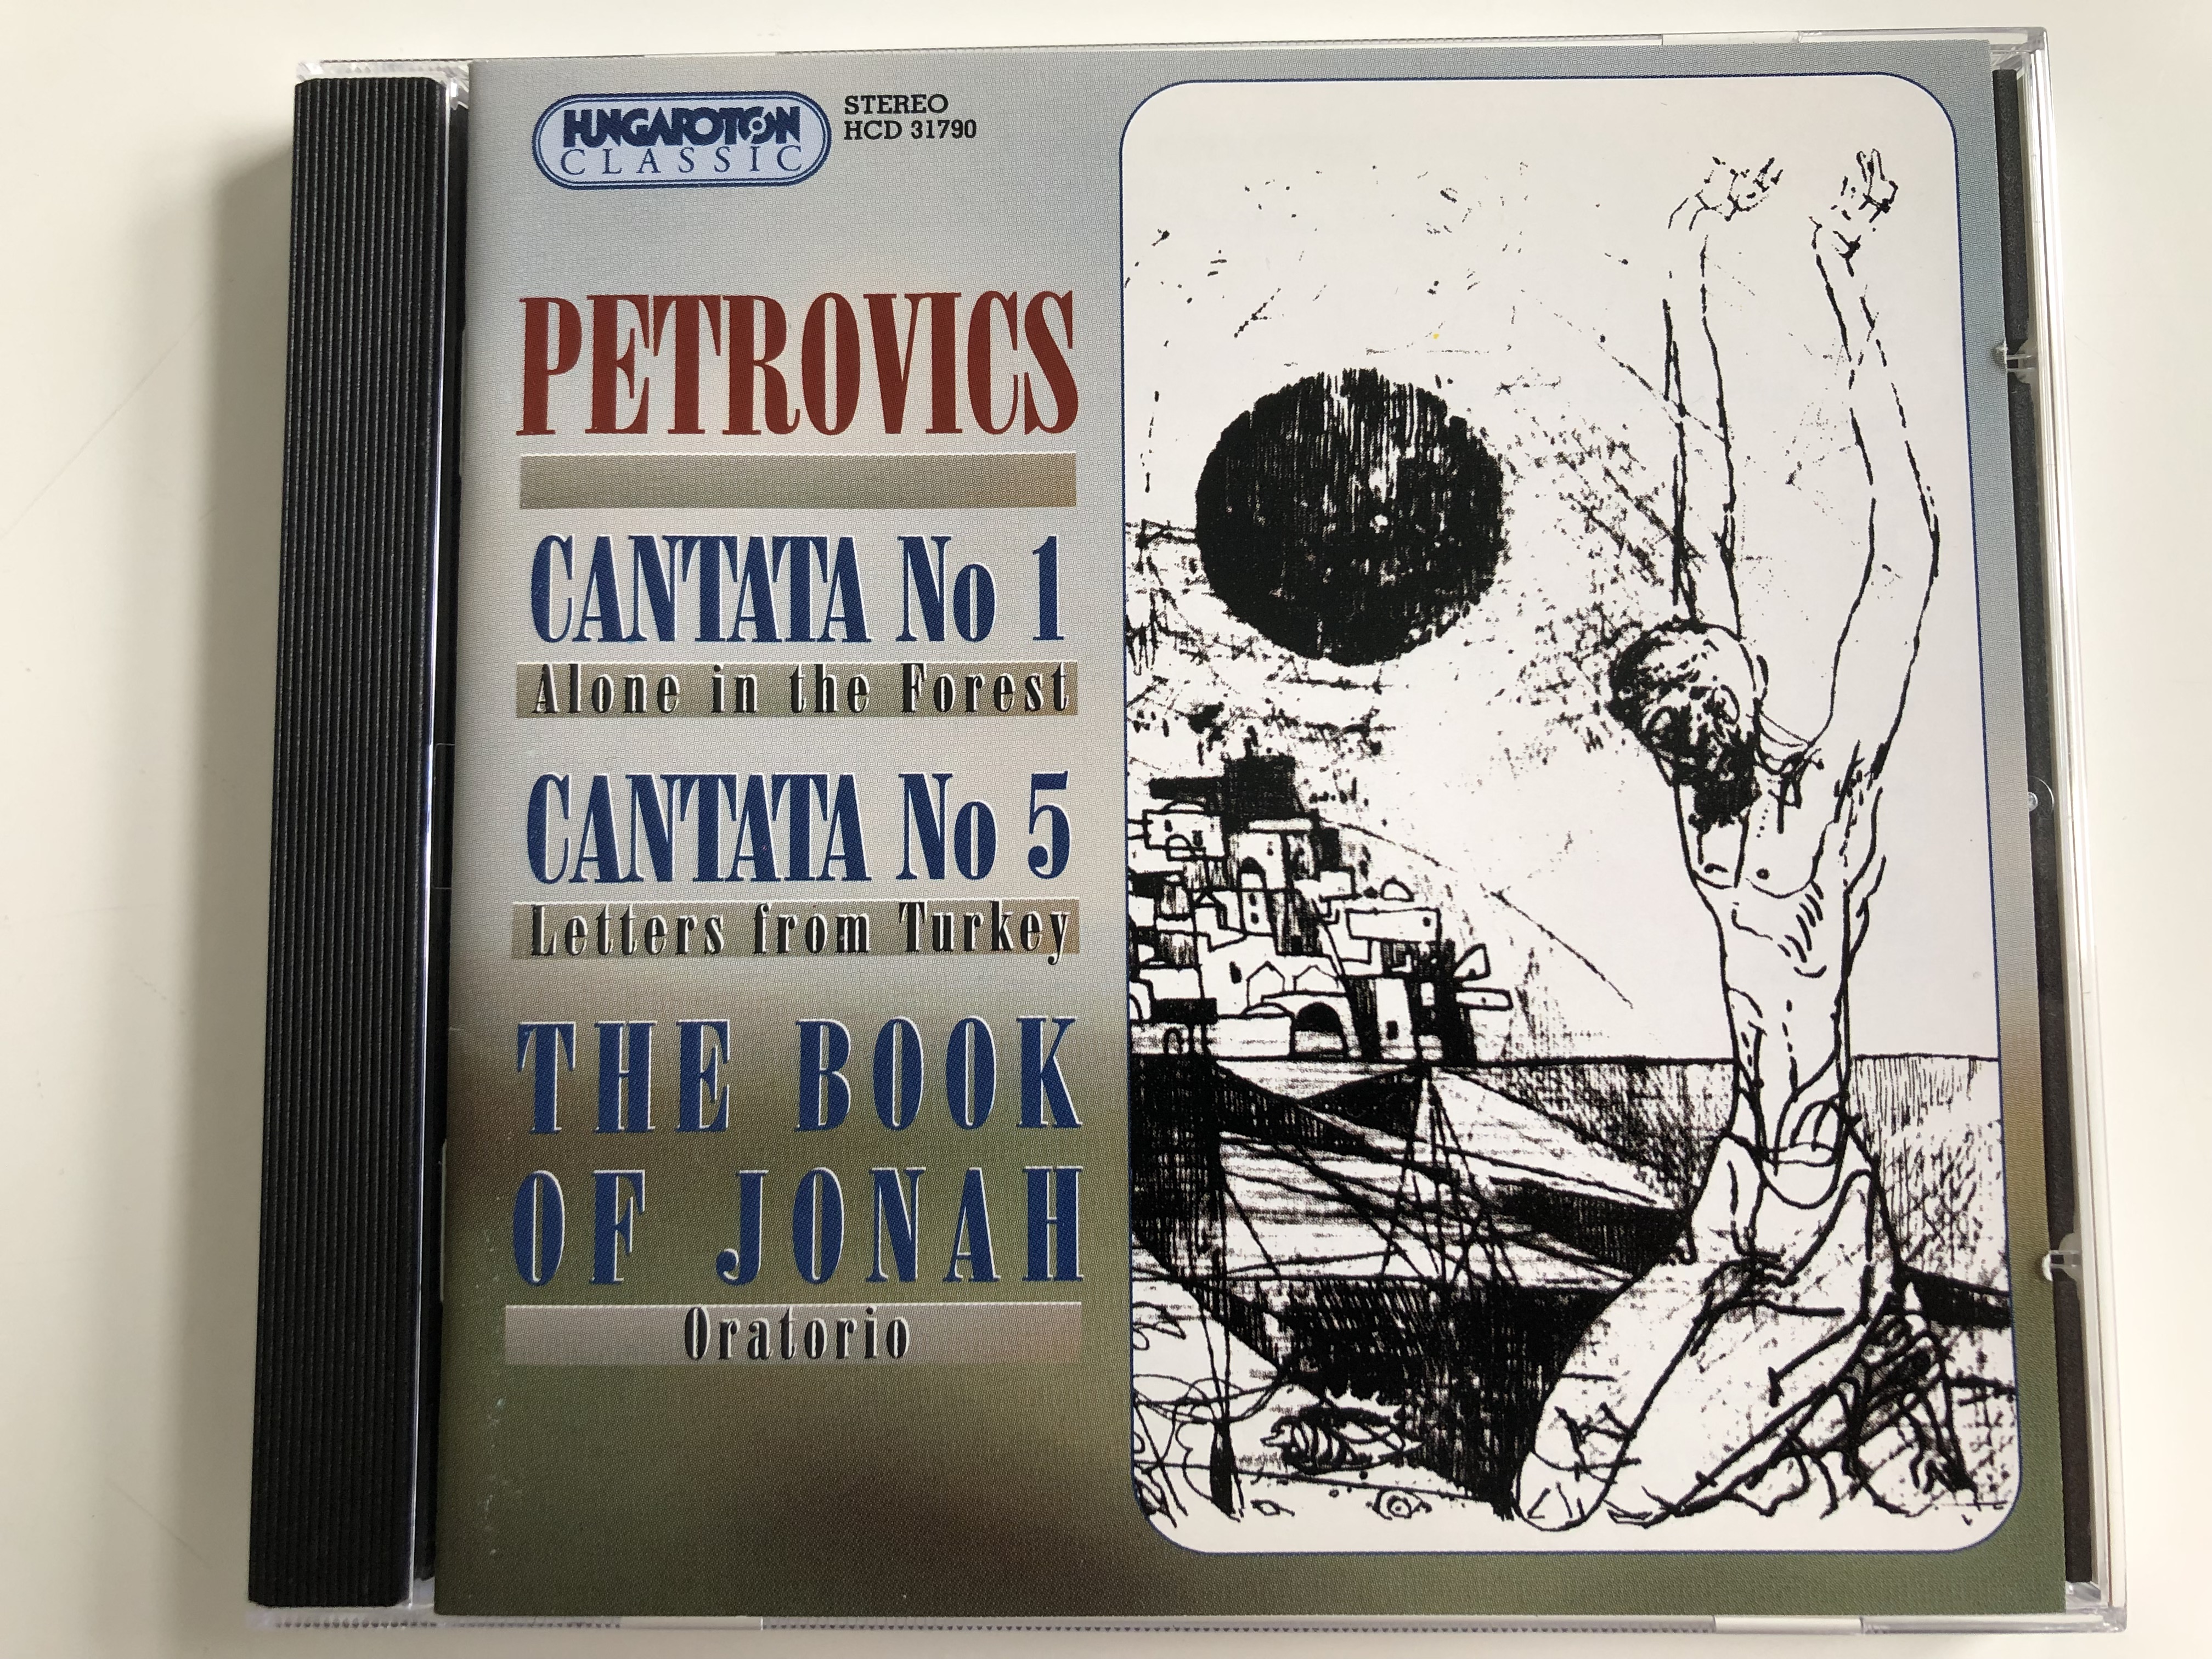 petrovics-cantata-no-1-alone-in-the-forest-cantata-no-5-letters-from-turkey-the-book-of-jonah-oratorio-hungaroton-audio-cd-1981-stereo-hcd-31790-1-.jpg